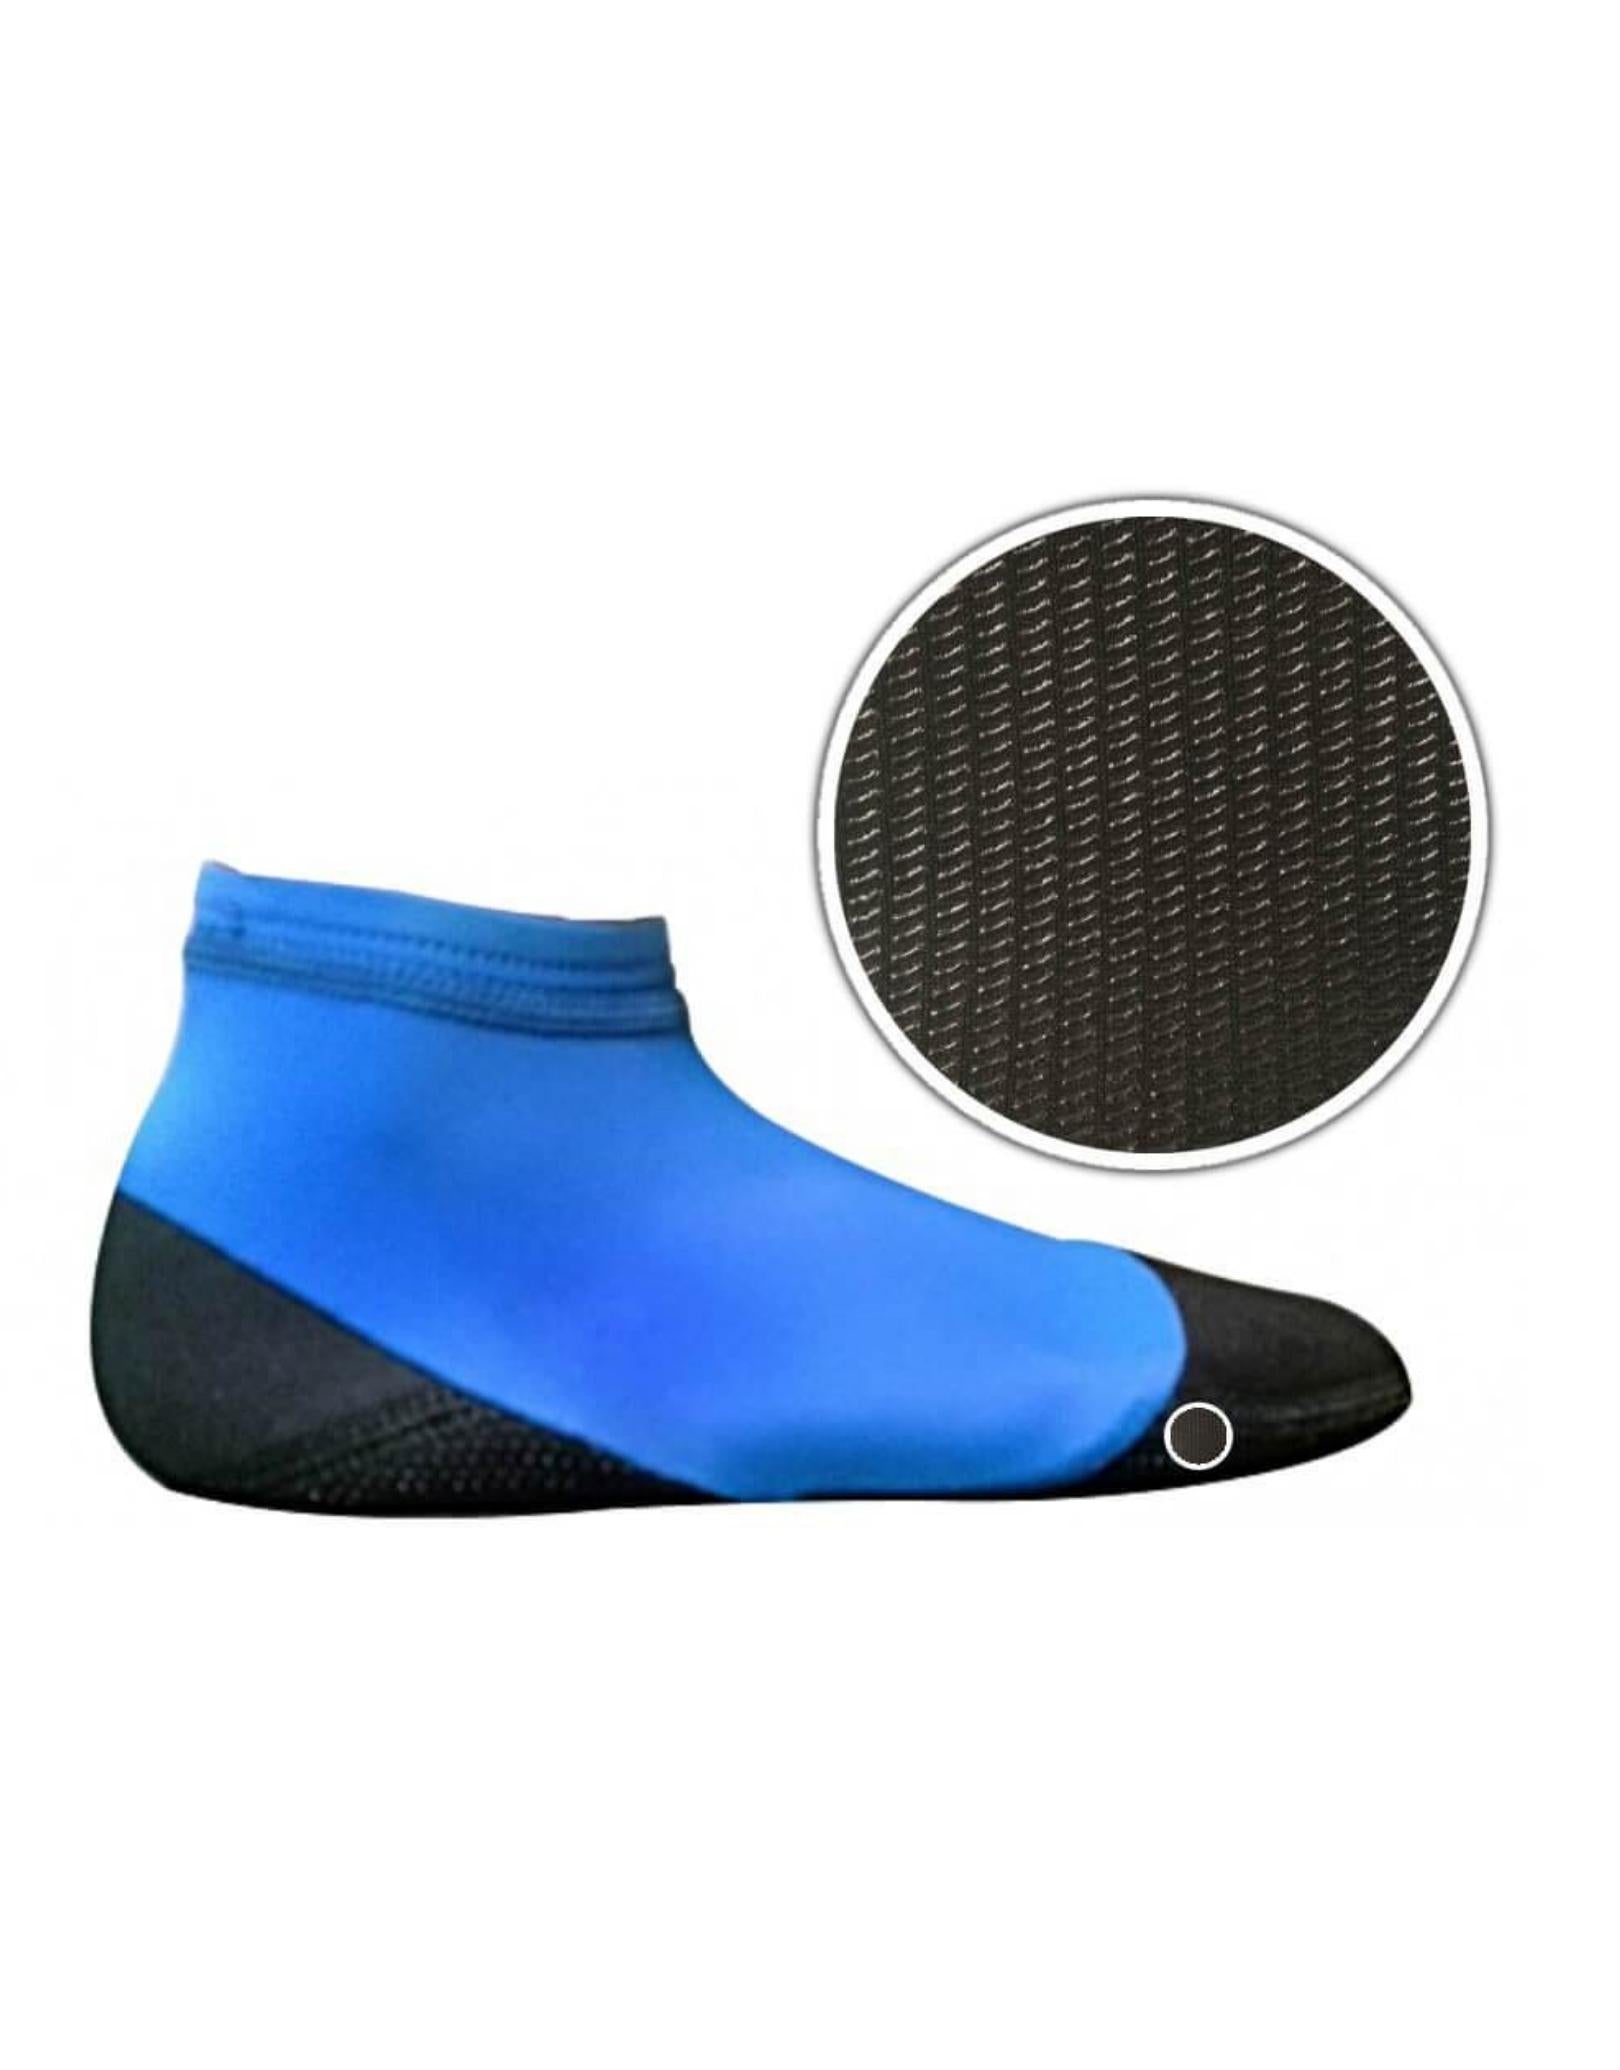 SwimExpert Aquashoe Neoprene Pool Socks - Royal Blue | Simply Swim ...